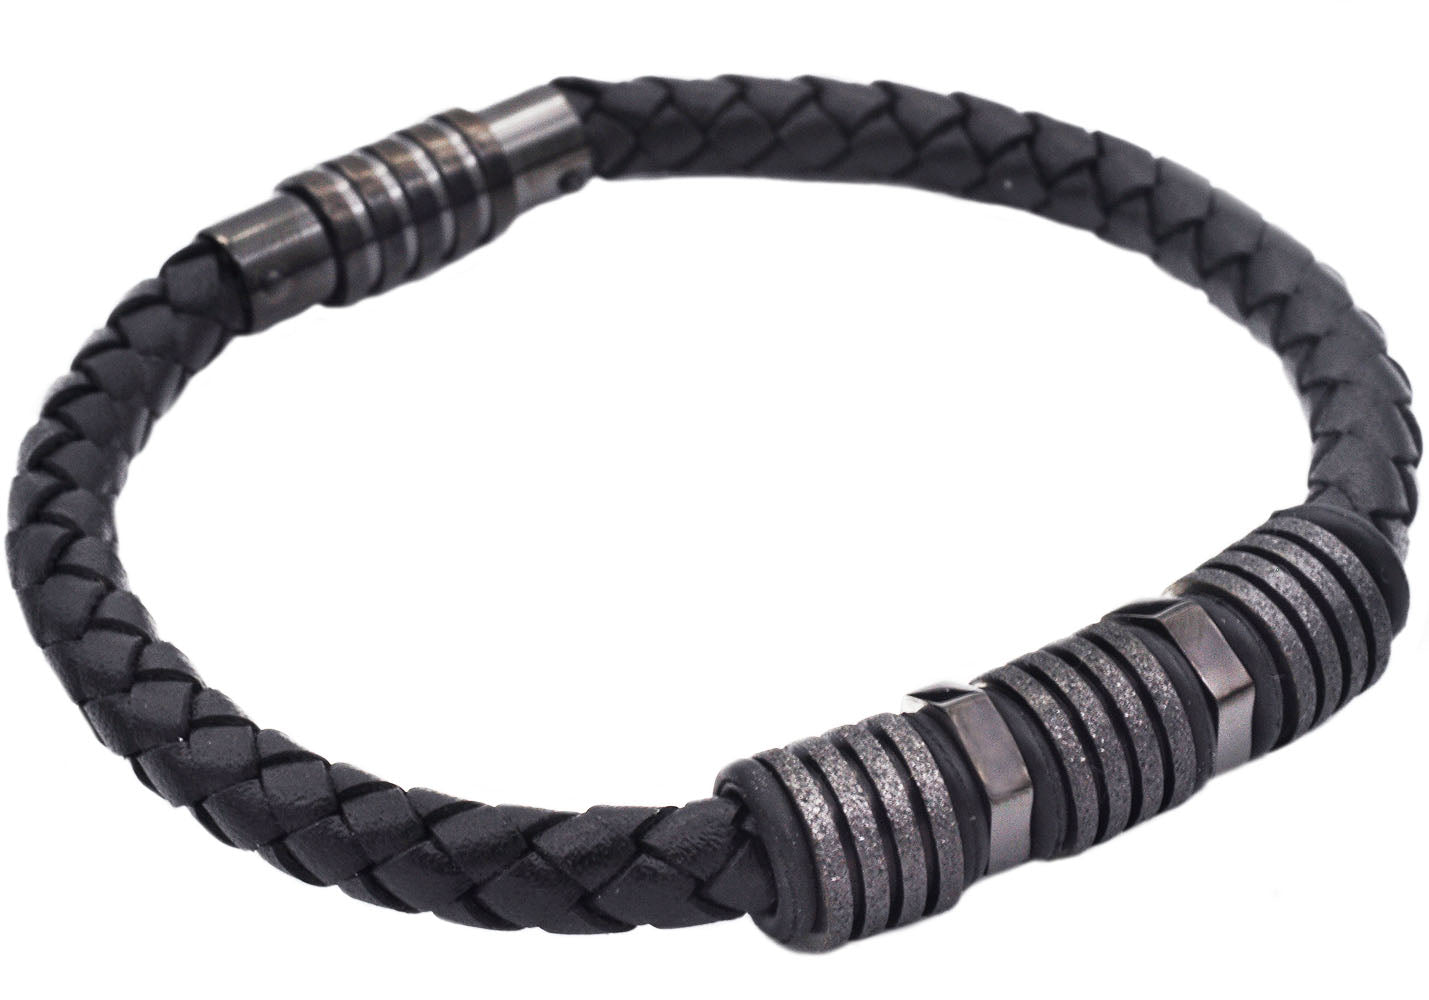 Jewelry: Men's black leather bracelet Sector Candy SZV78 steel and enamel